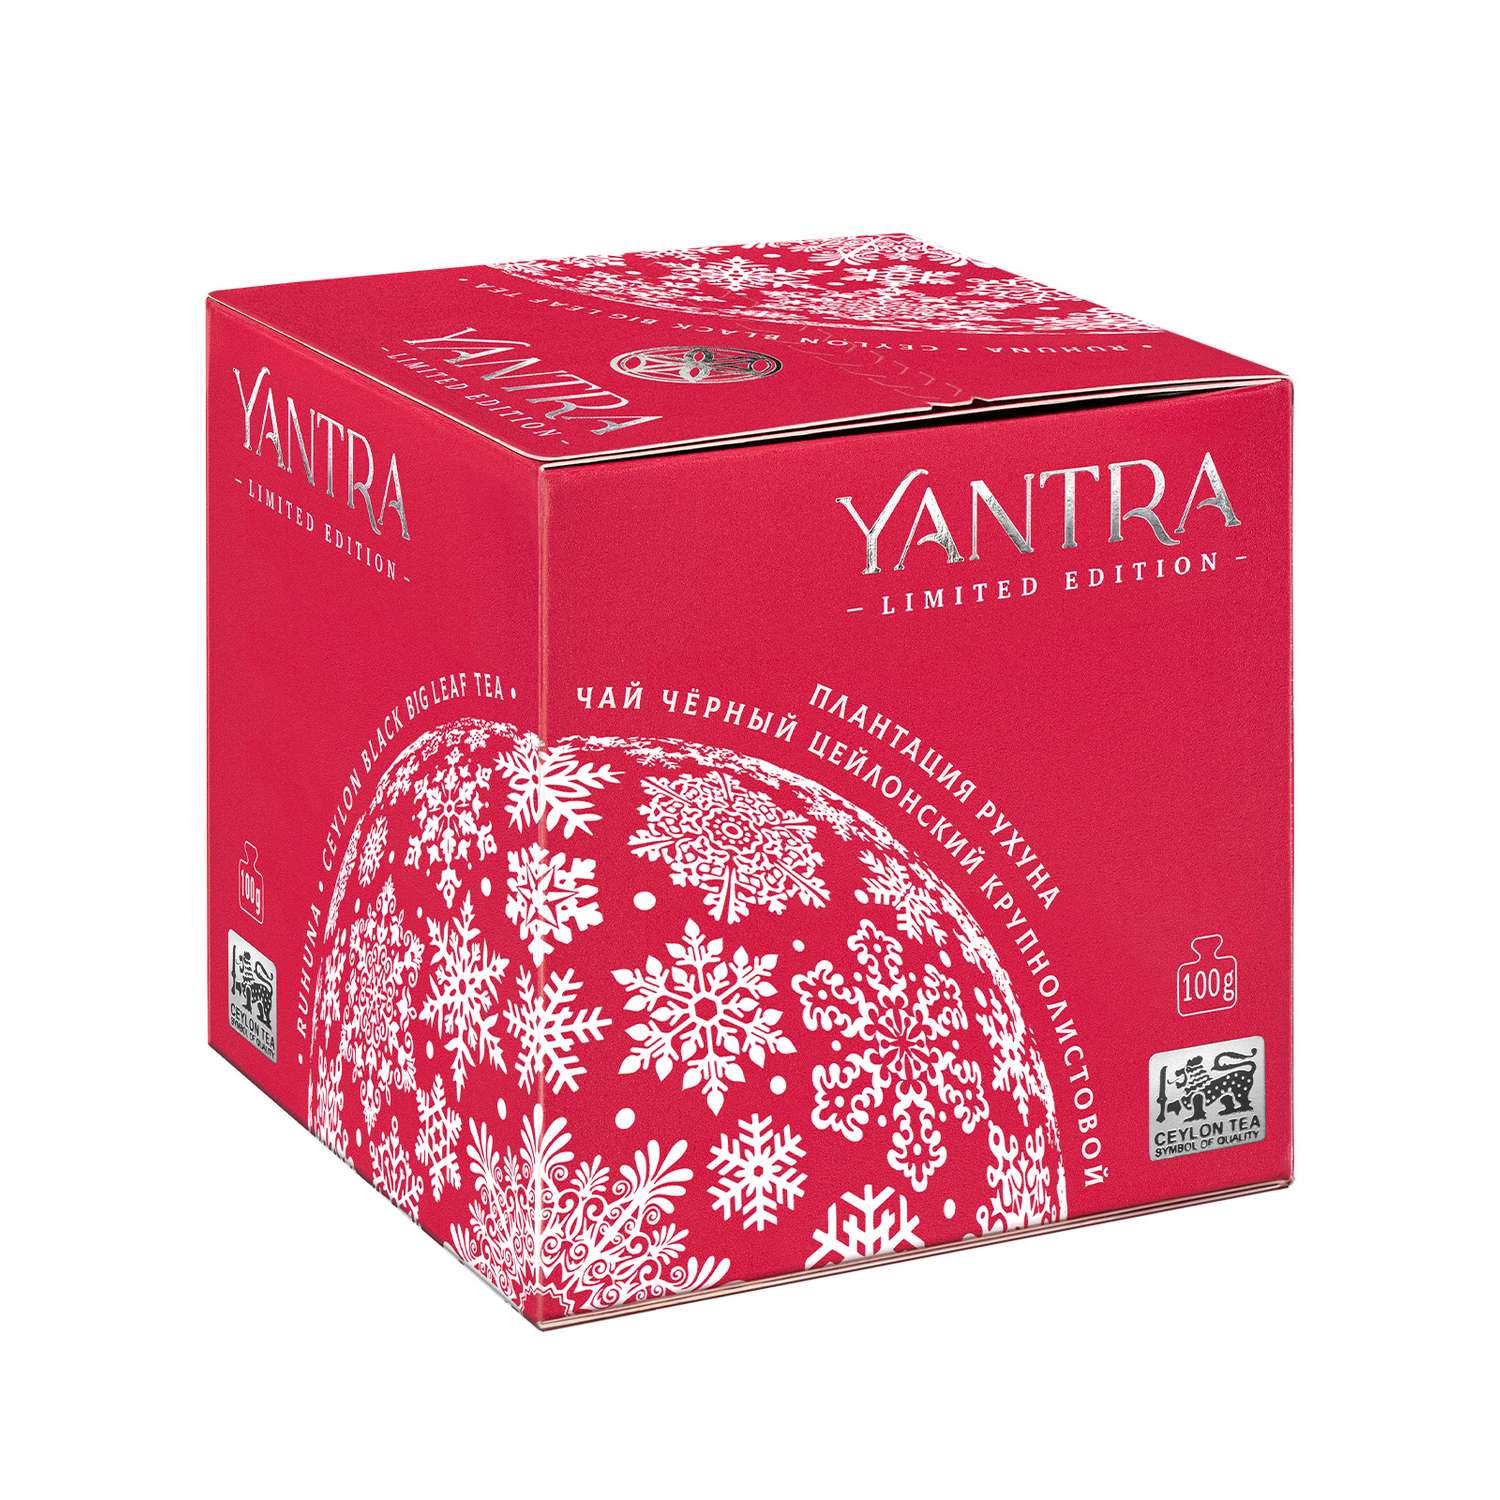 Чай Limited Edition Yantra чёрный крупнолистовой стандарт OPA 100 г - фото 1